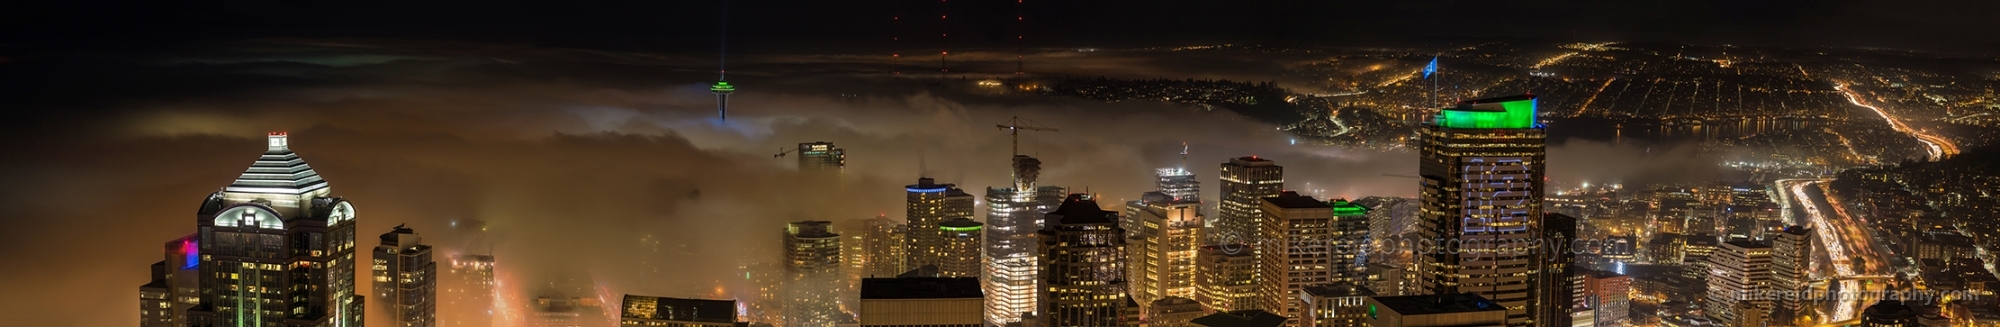 Seattle Under Fog Pano